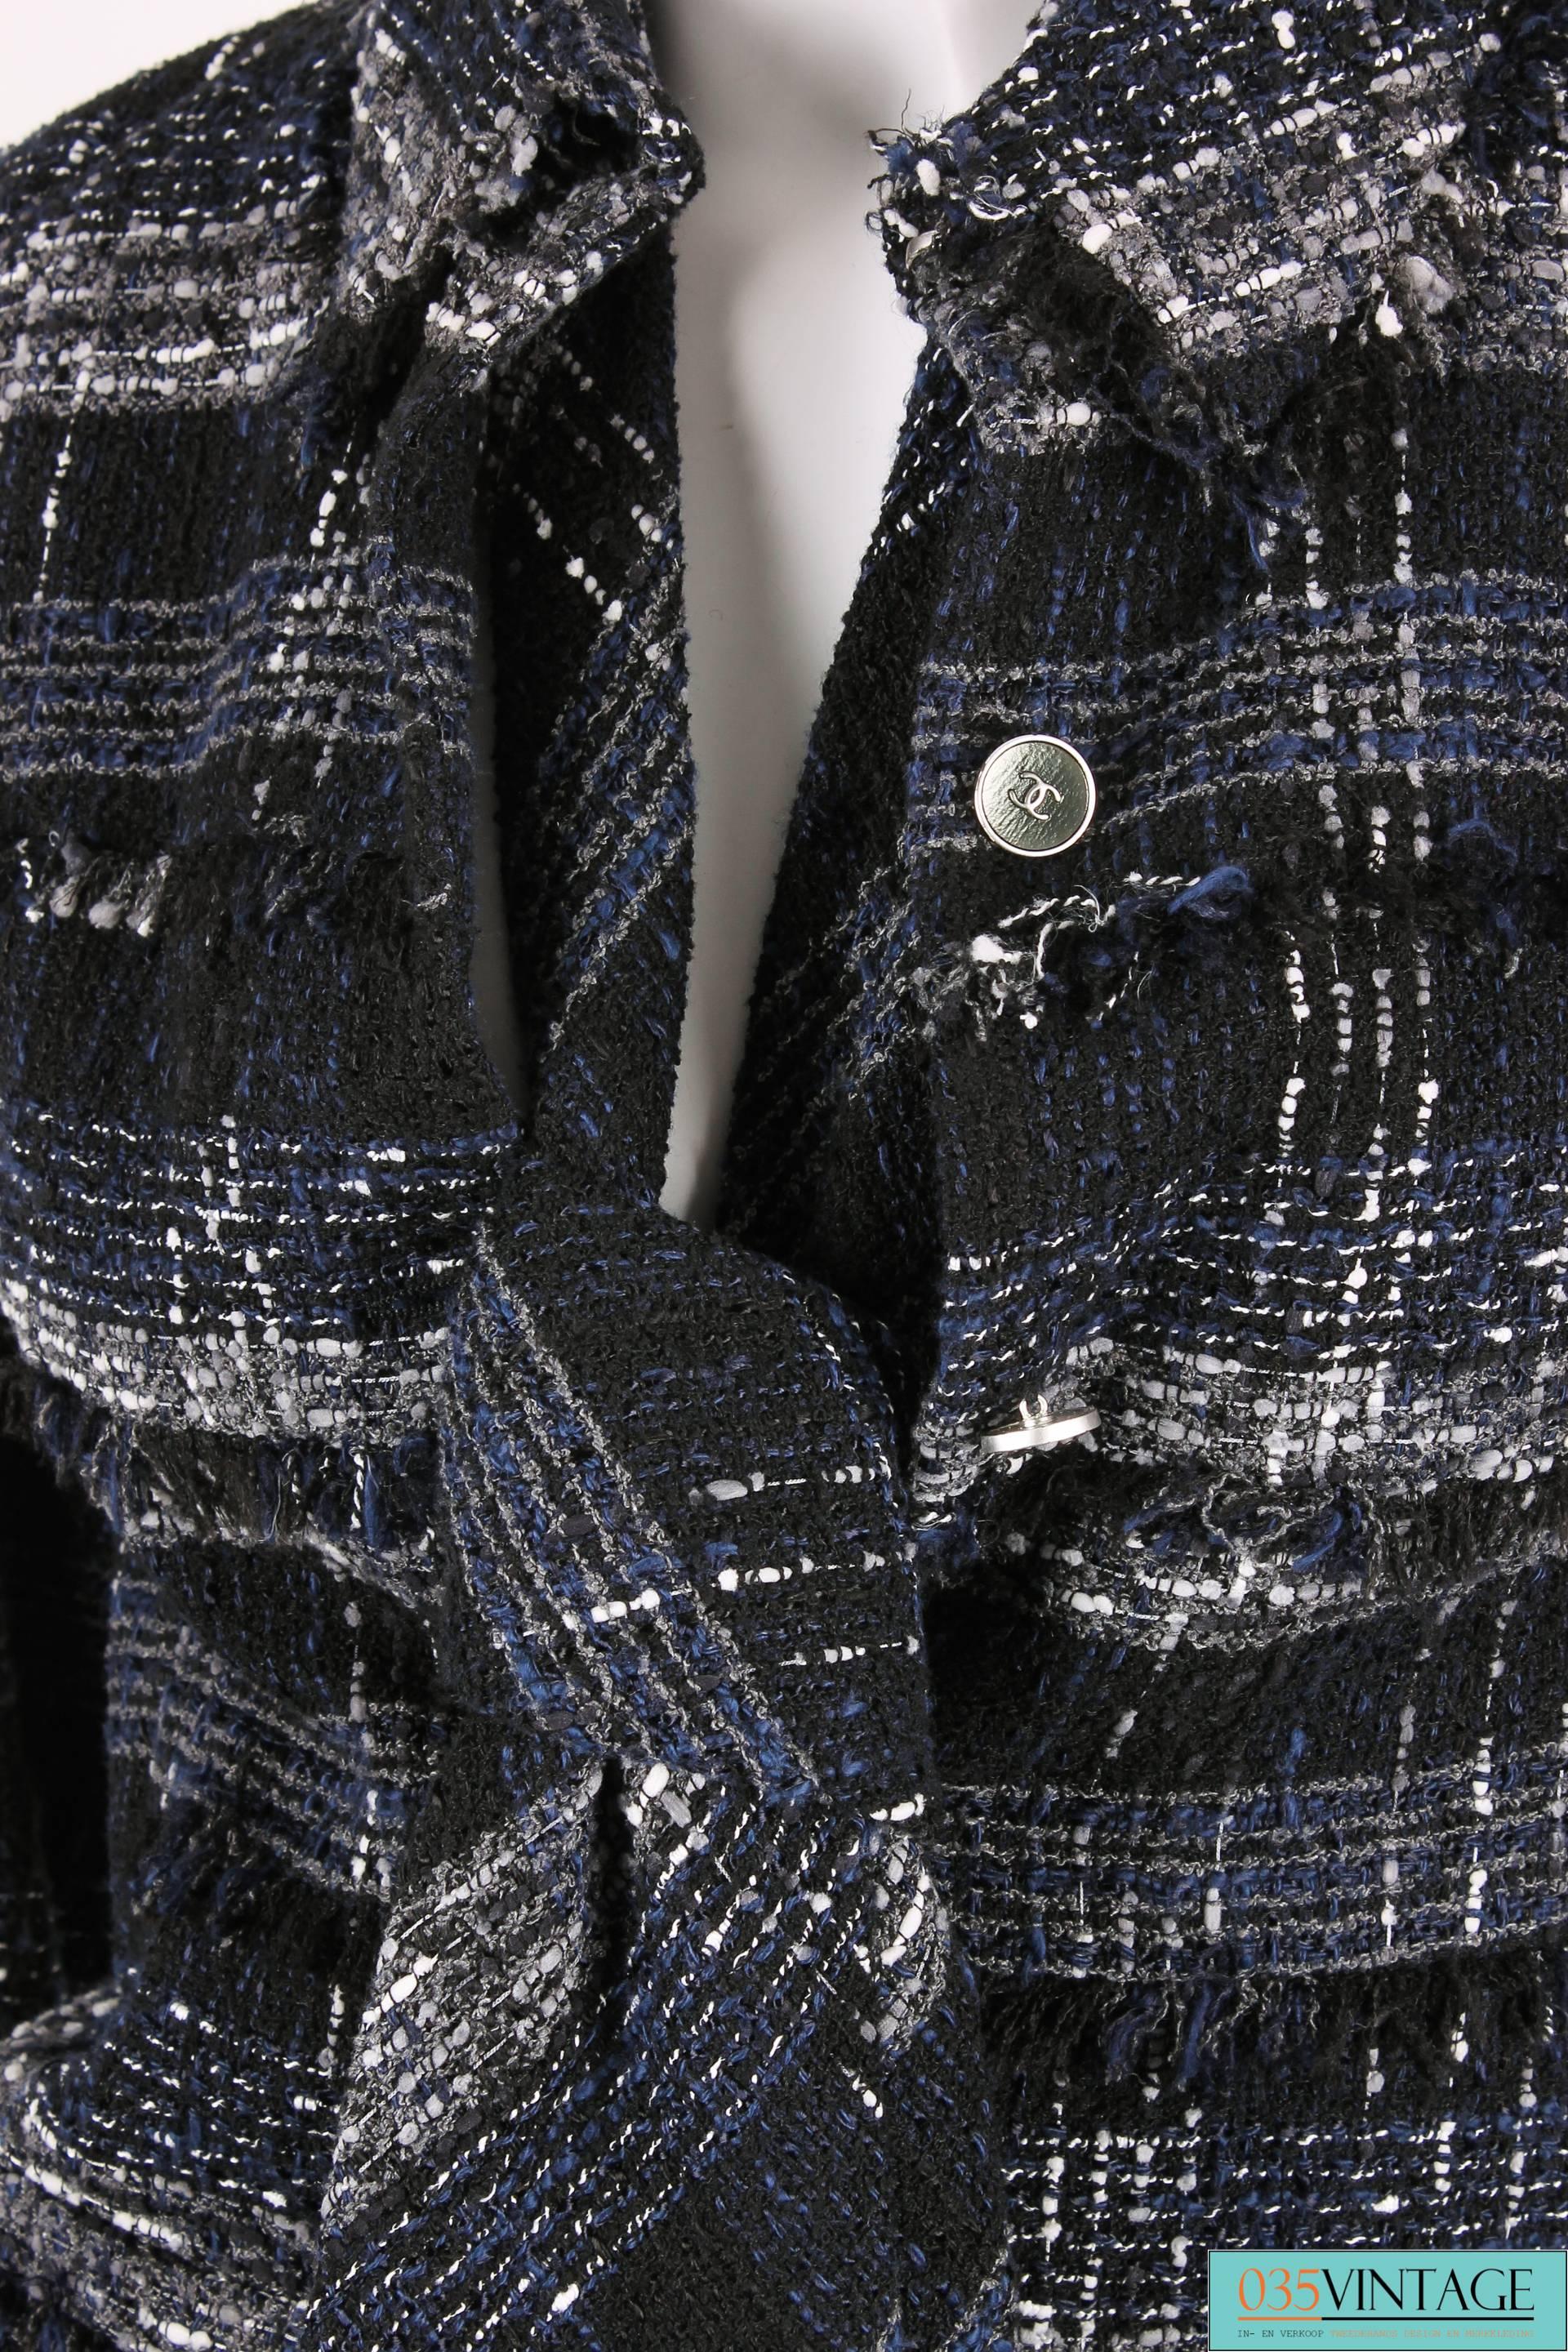 Chanel Suit 3-pcs Jacket, Skirt & Tie - dark blue/black/grey/white 2